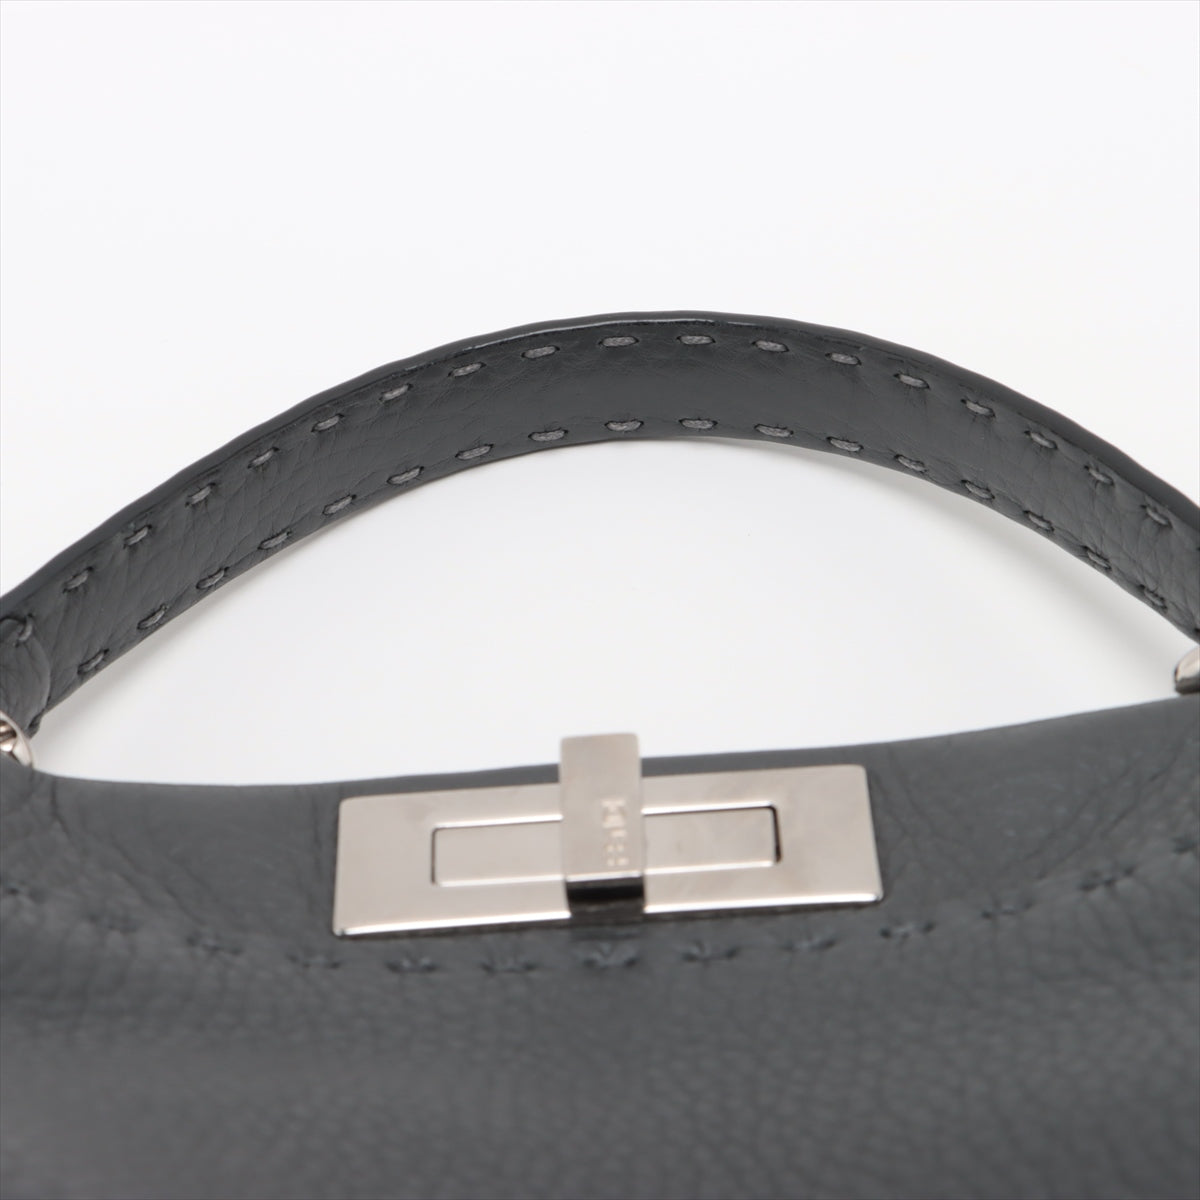 Fendi Peekaboo Regulator Selleria Leather 2WAY Handbag Gr 8BN290